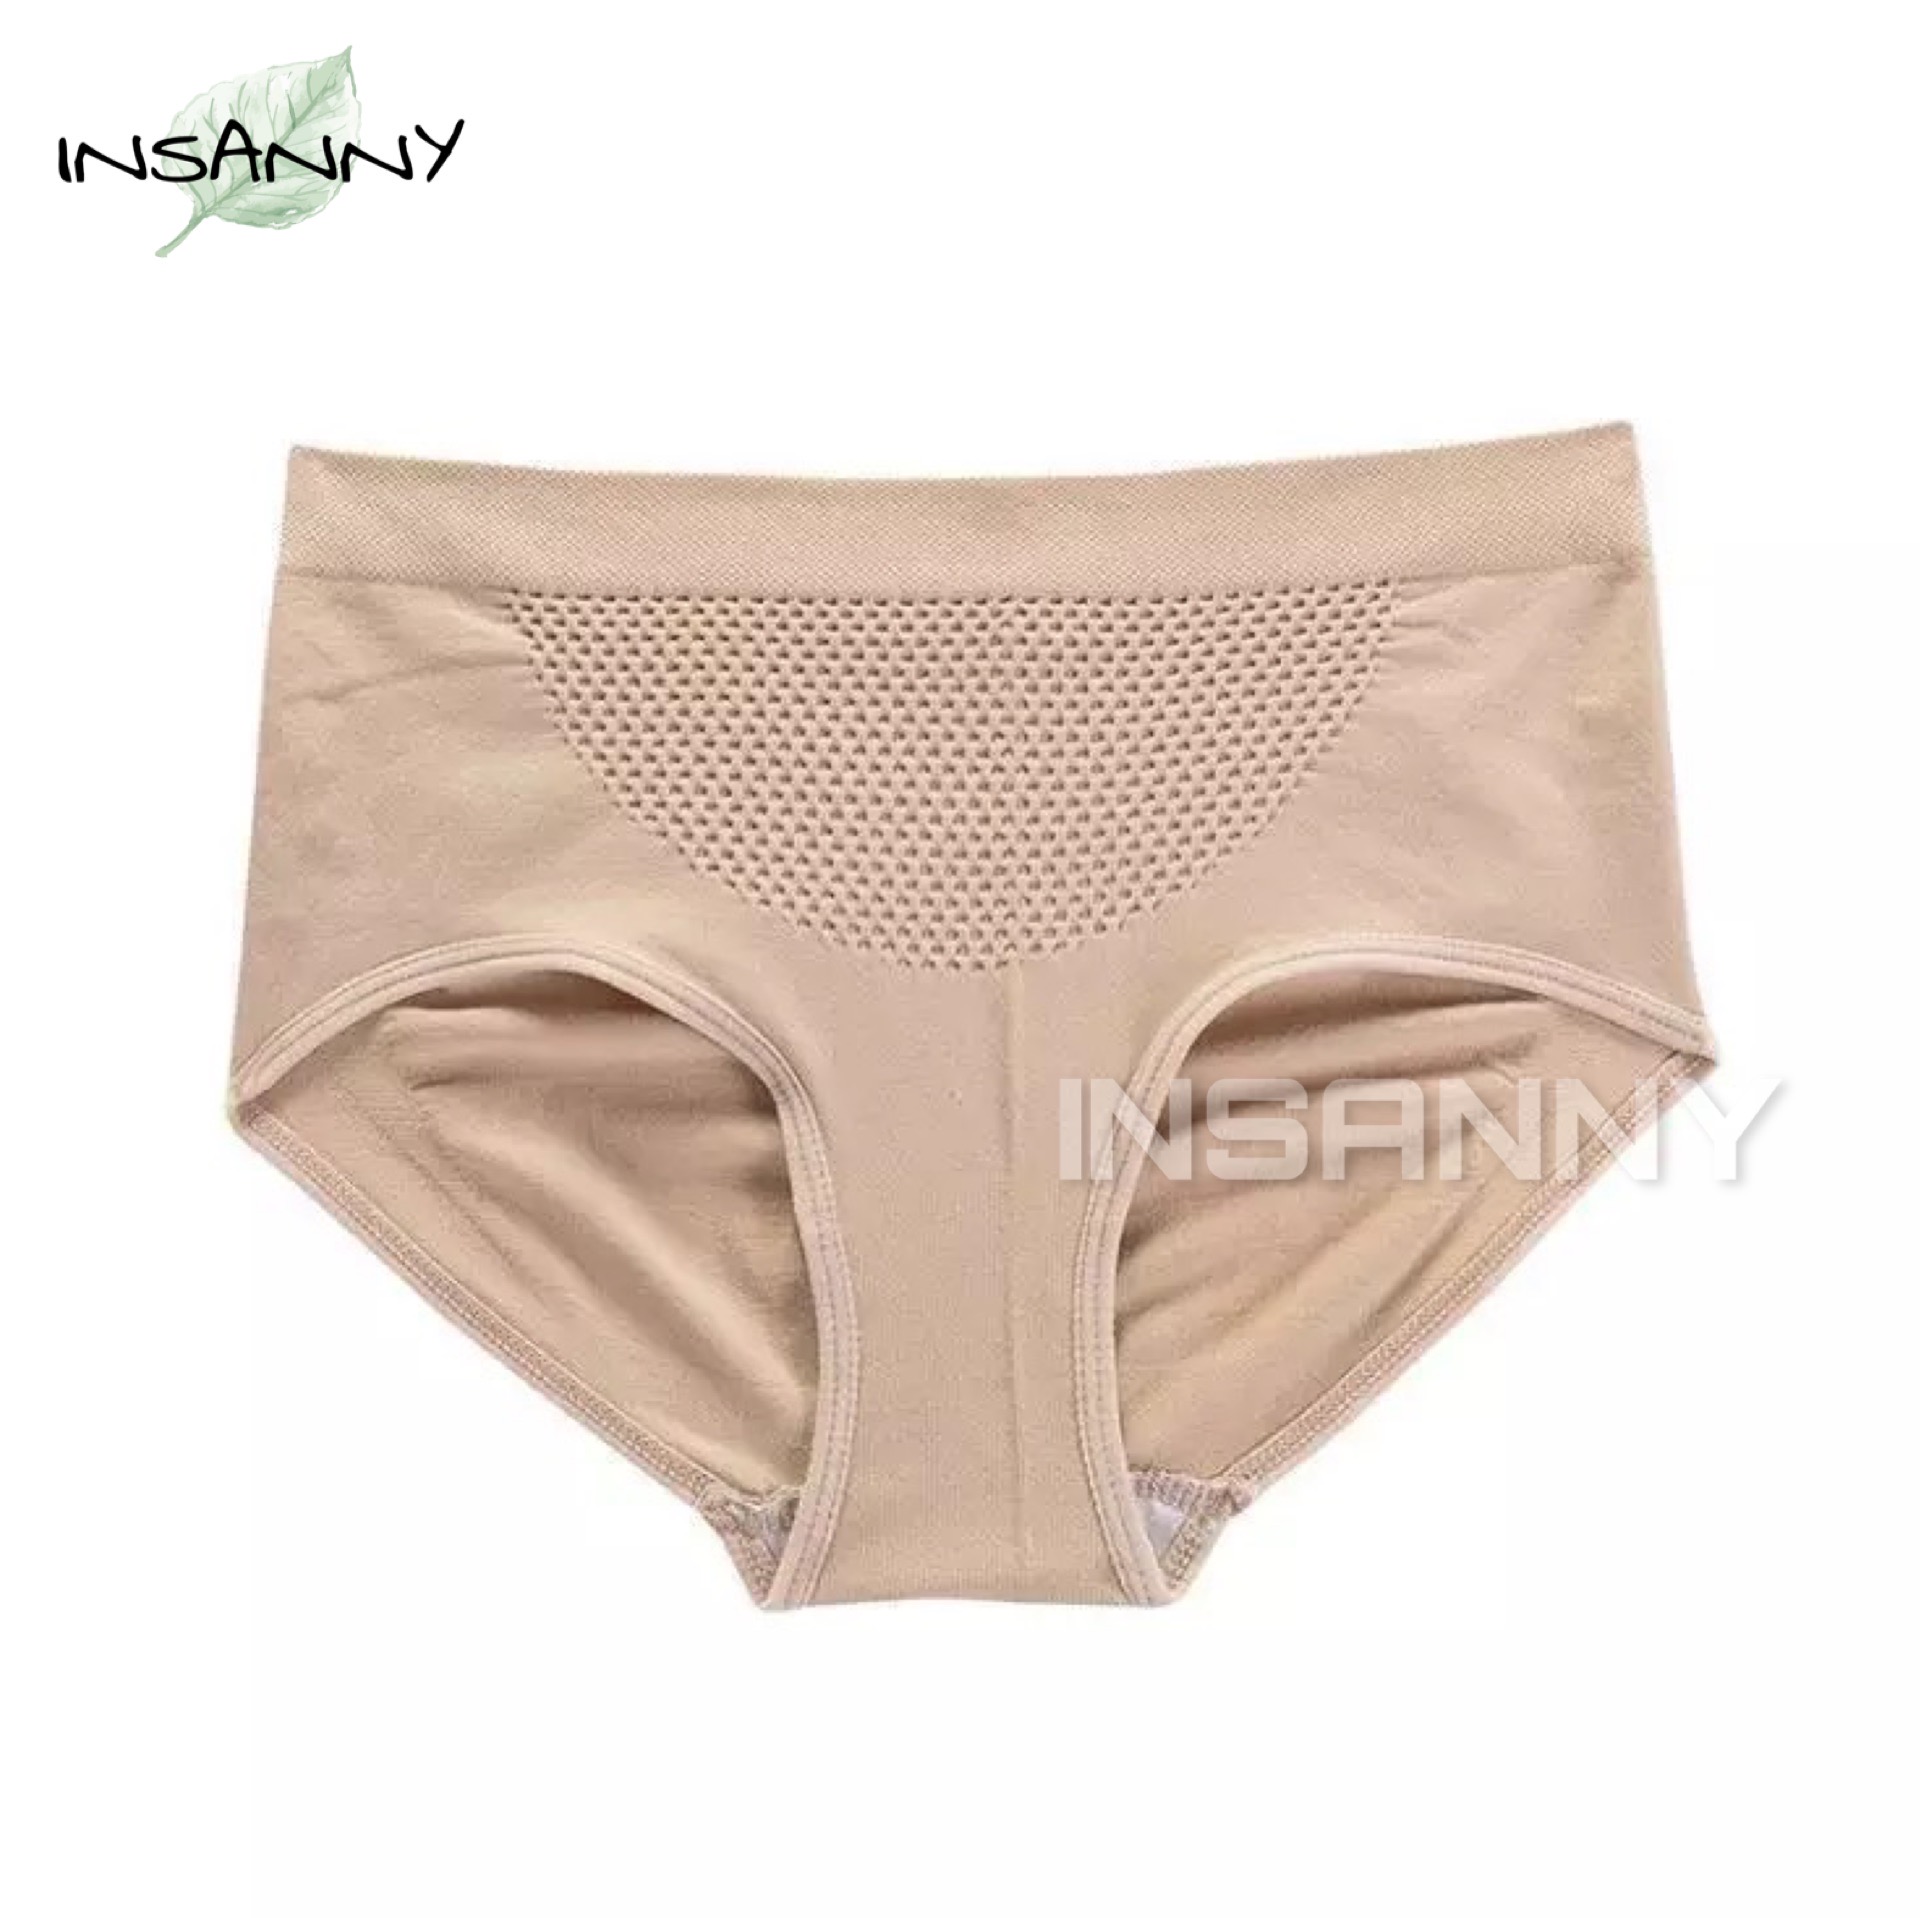 High quality H&M panty for women cotton panties 6pcs-12pcs